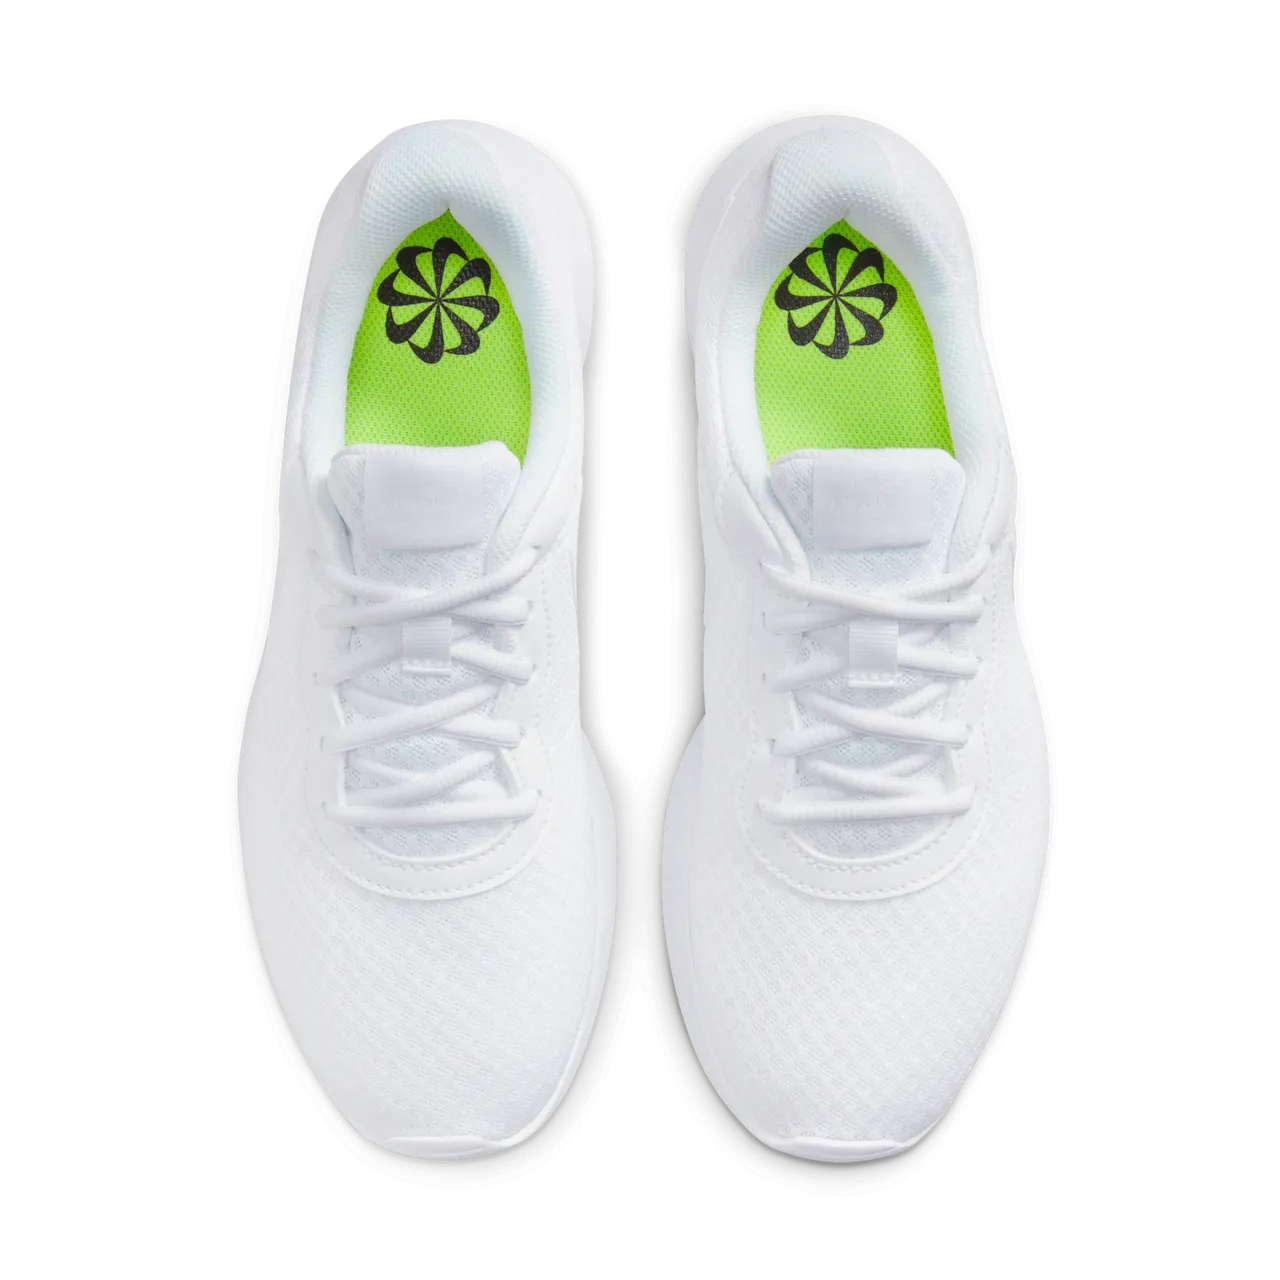 Nike Tanjun Damenschuh - Weiß